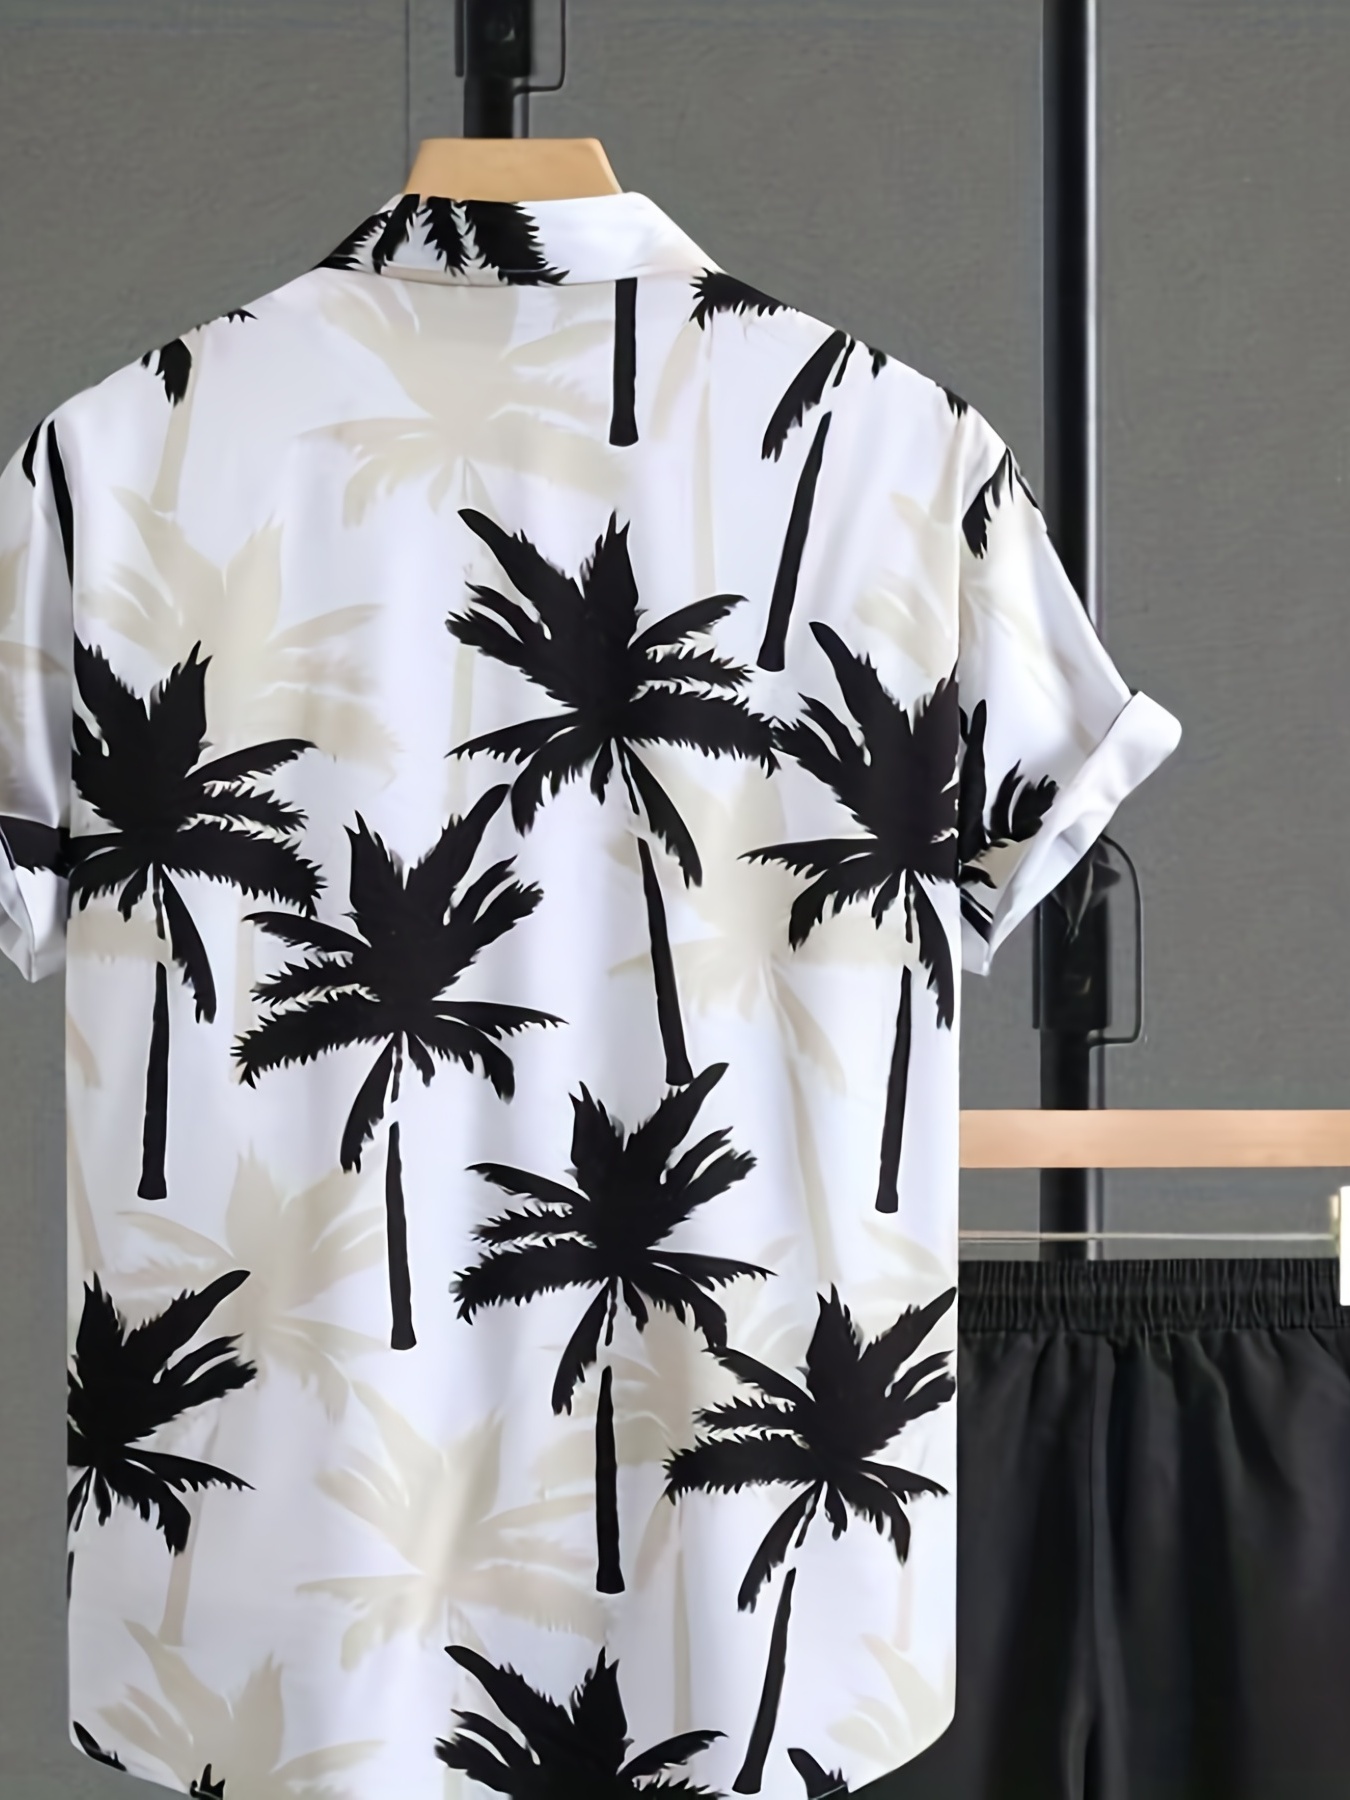 coconut tree vintage car print mens casual short sleeve shirt mens shirt for summer vacation resort details 5